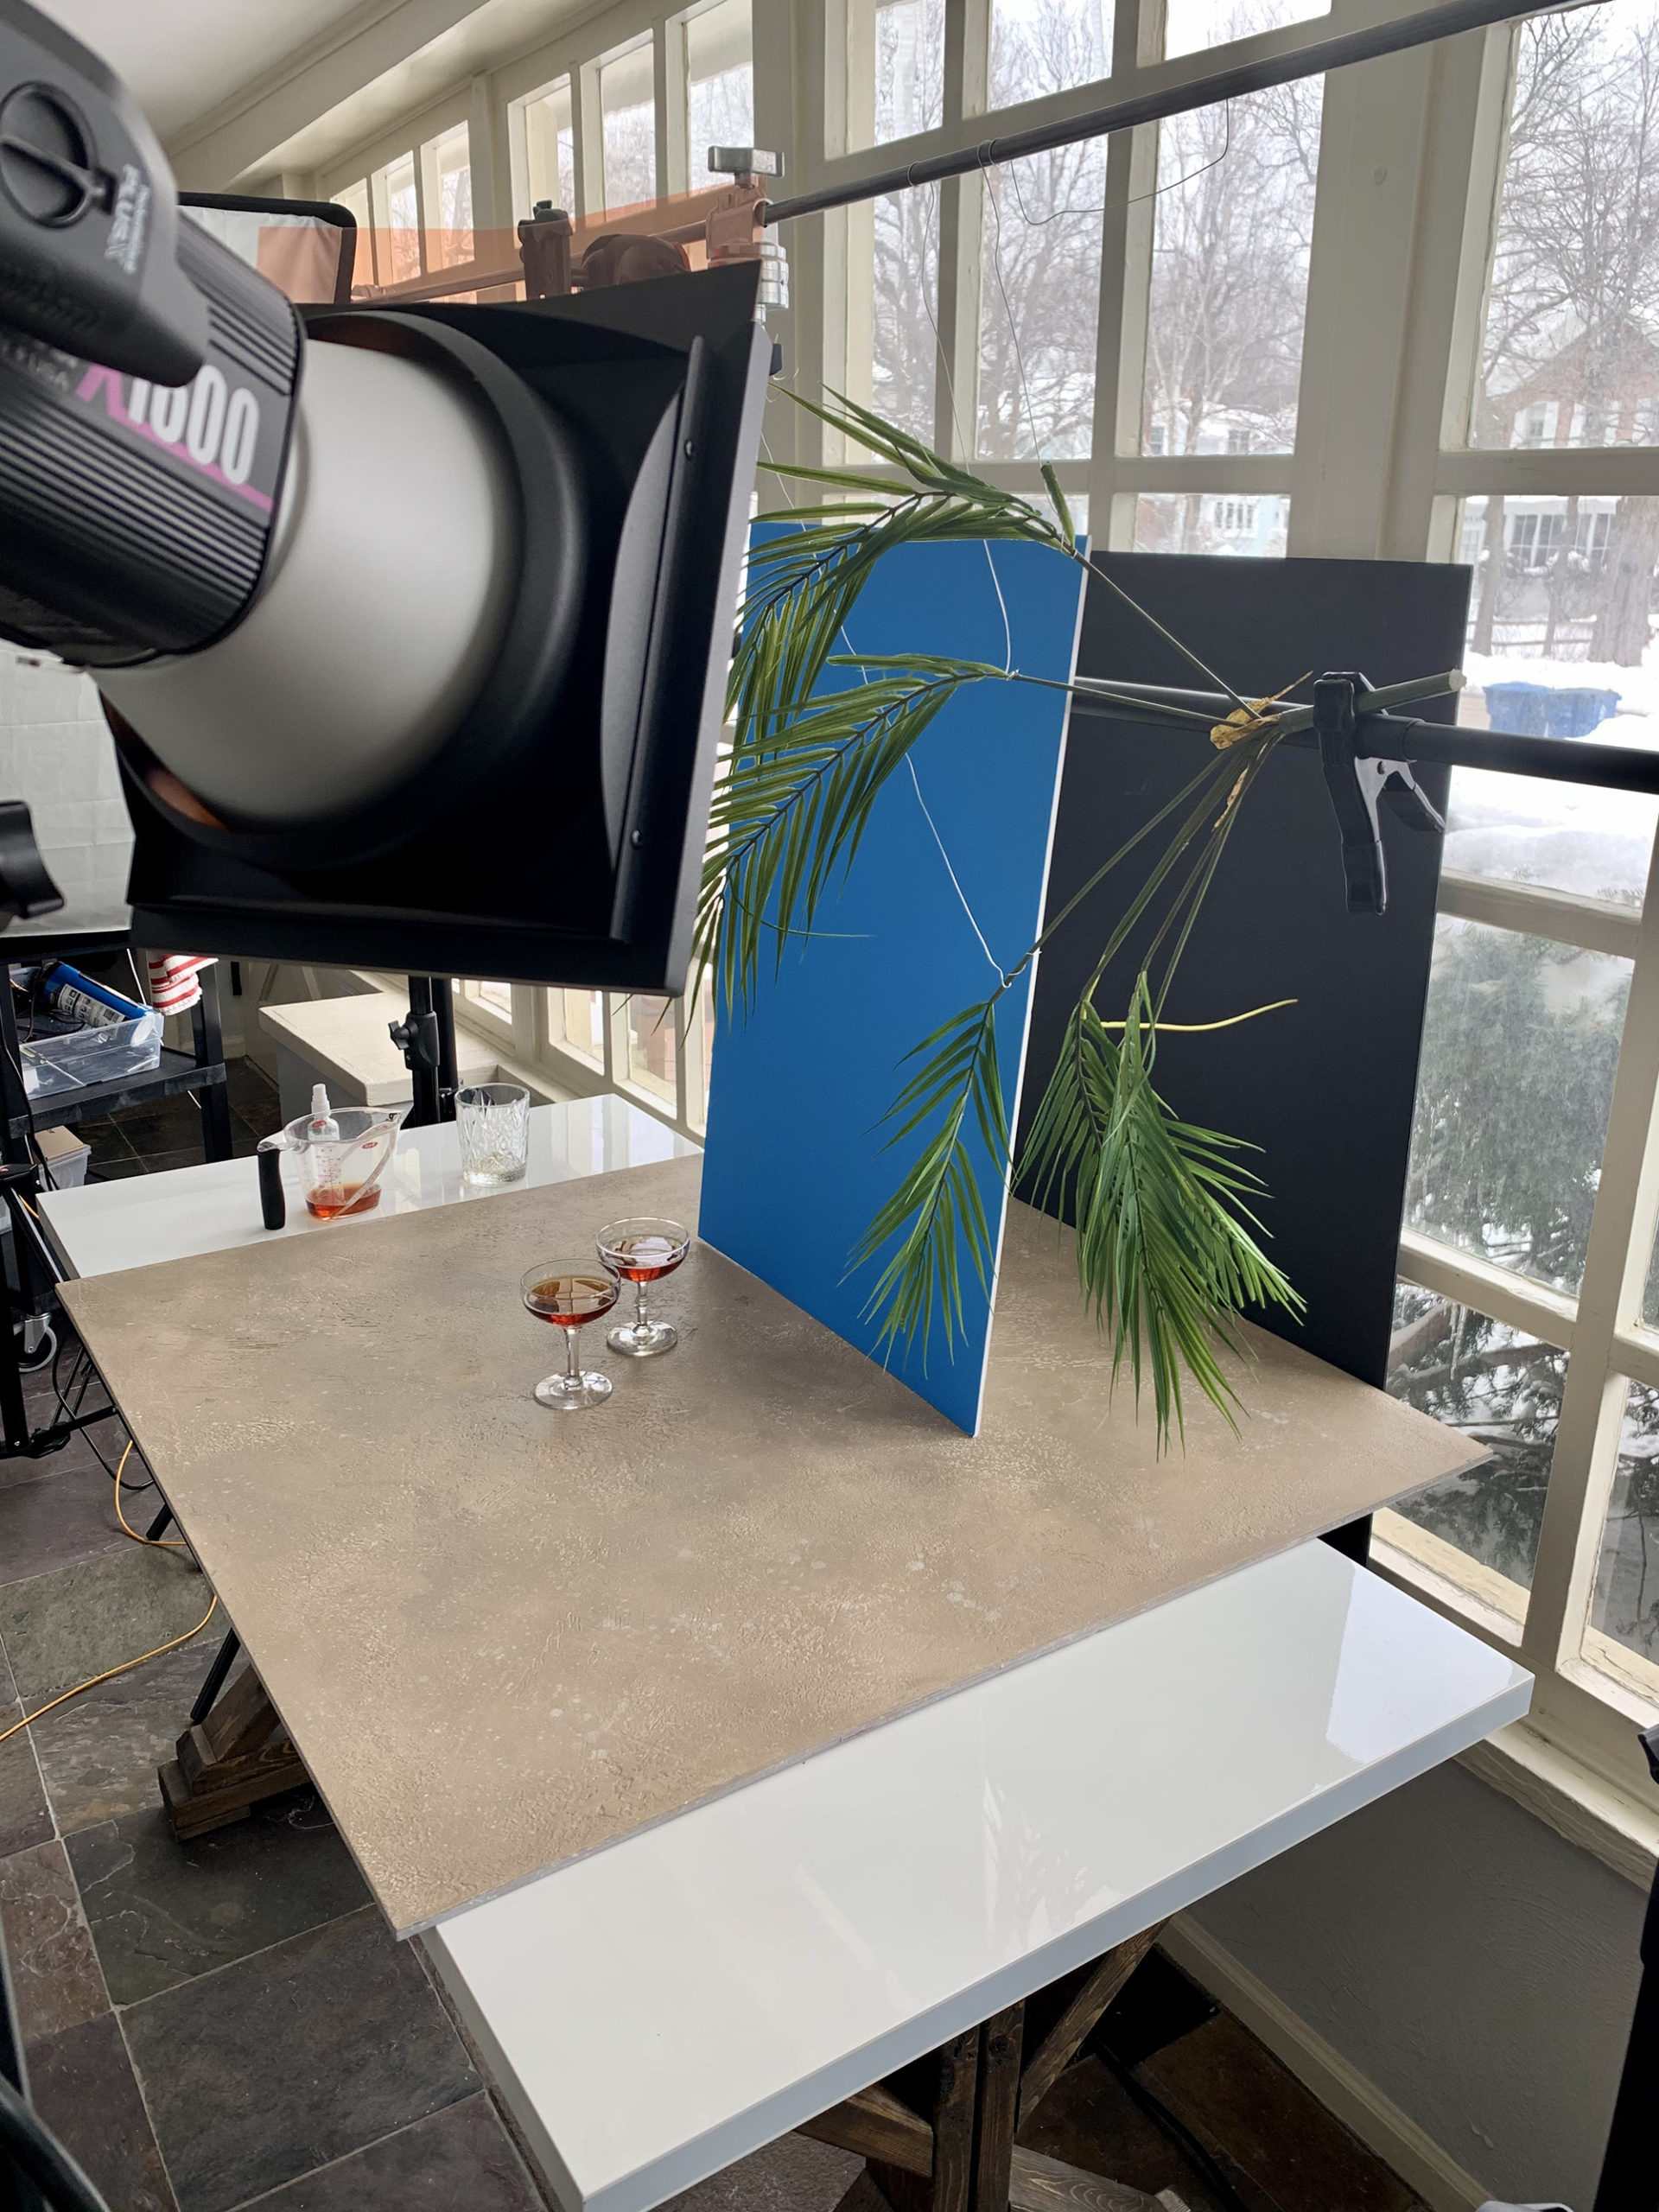 Photo shoot studio setup